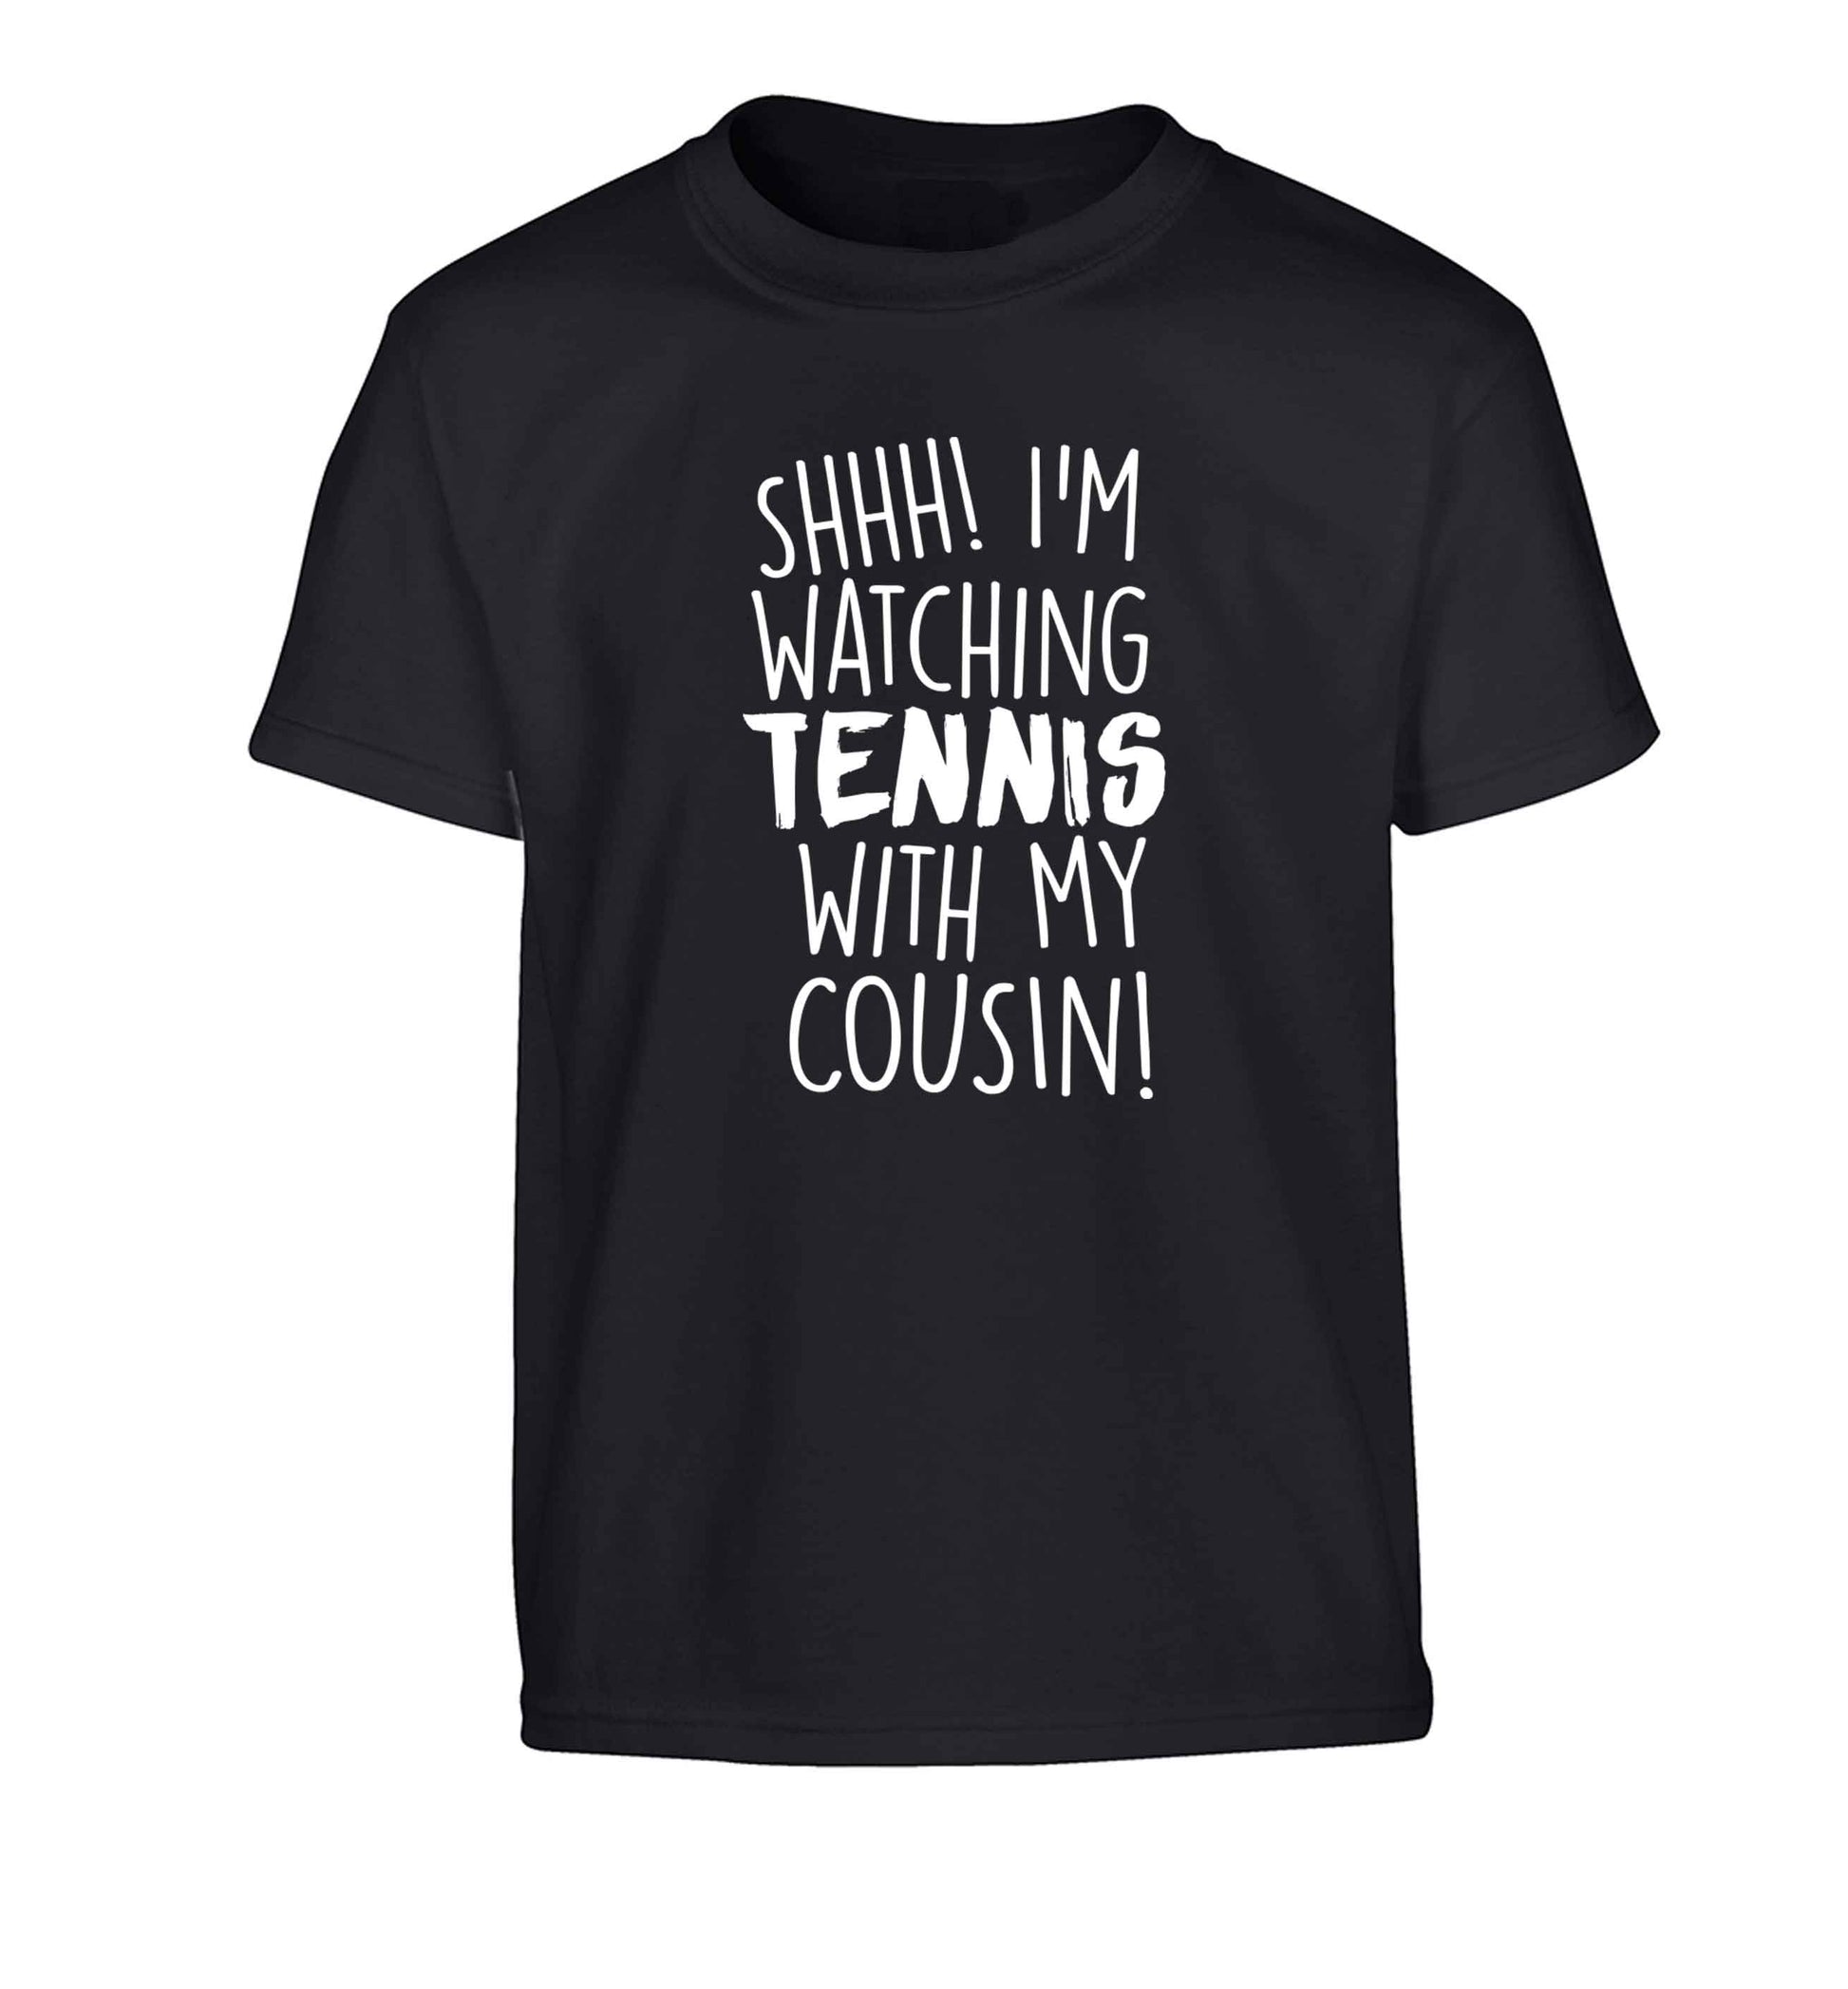 Shh! I'm watching tennis with my cousin! Children's black Tshirt 12-13 Years